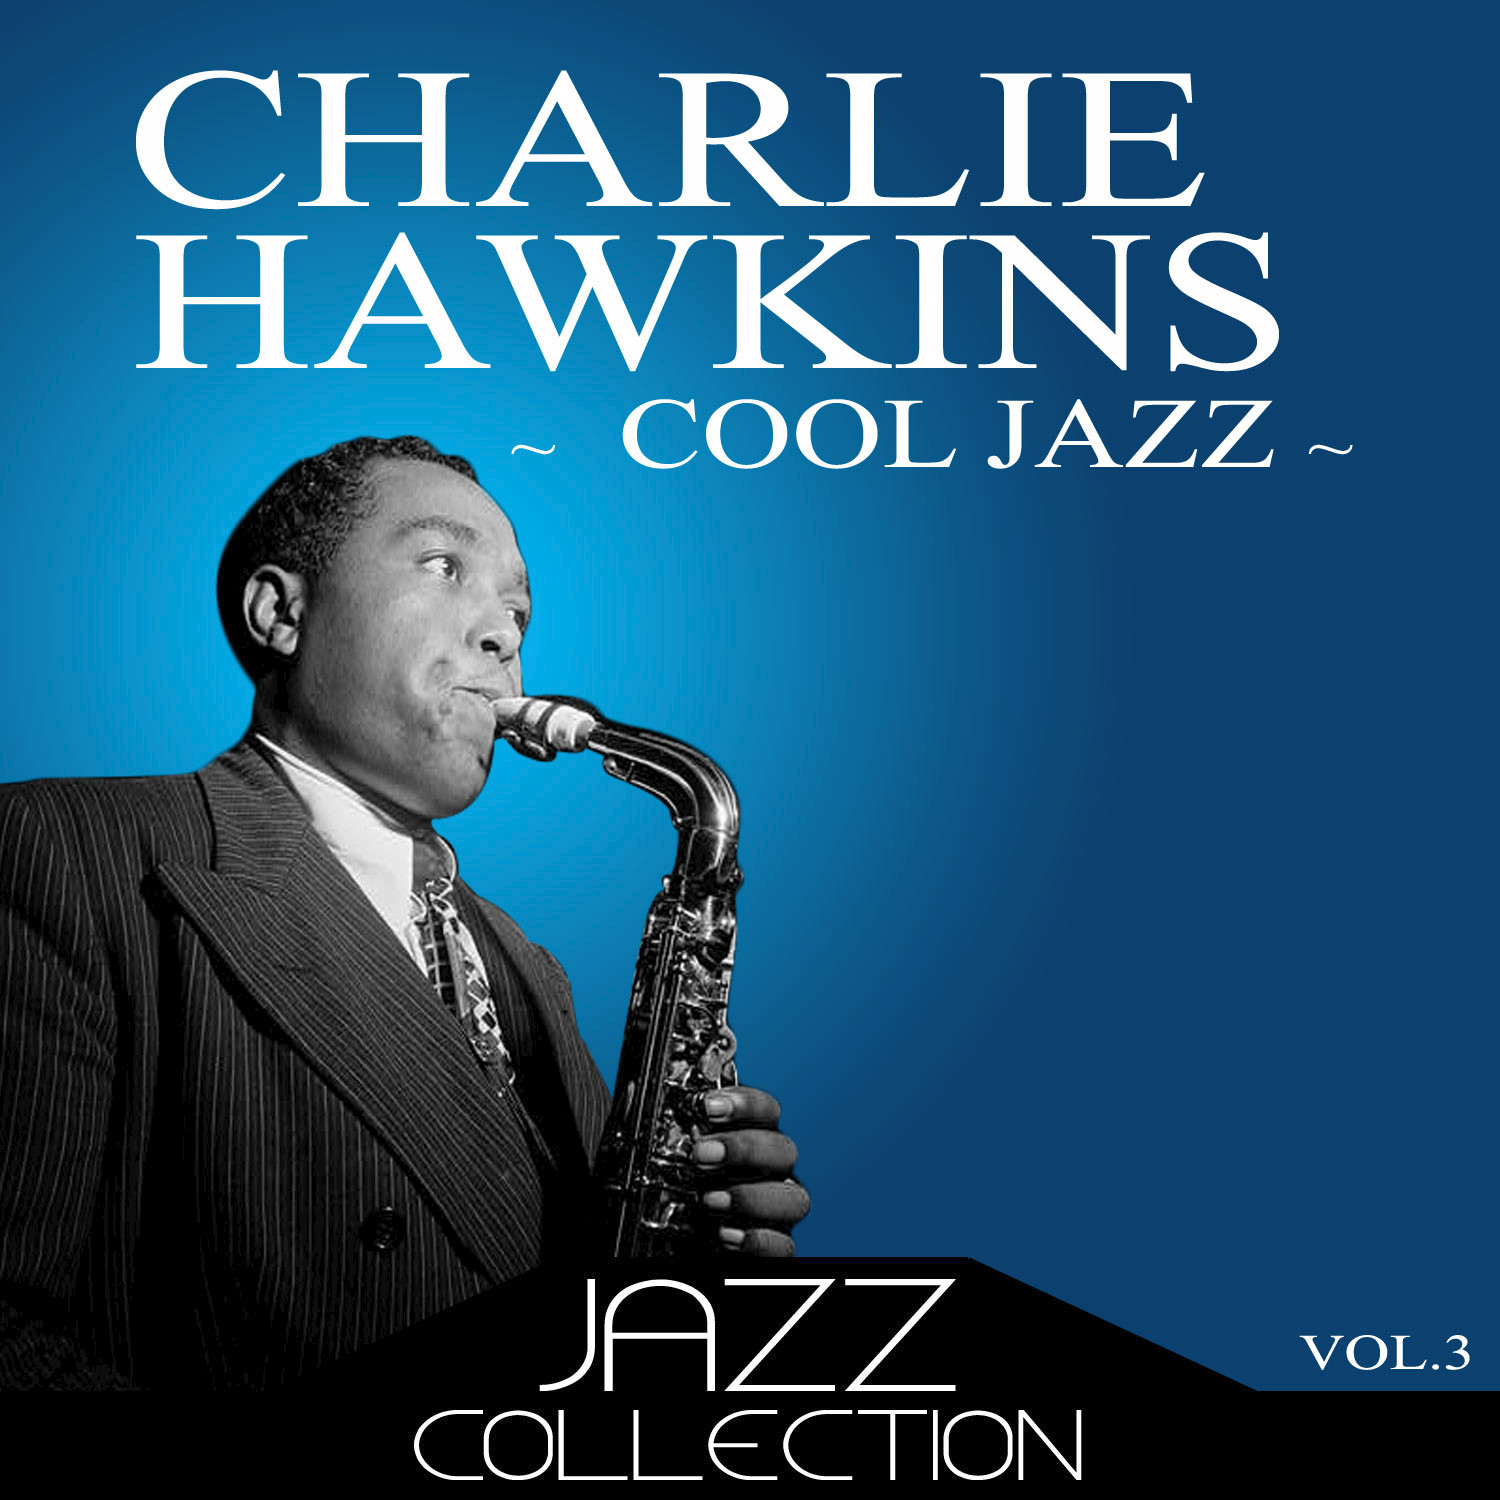 Cool Jazz Vol. 3